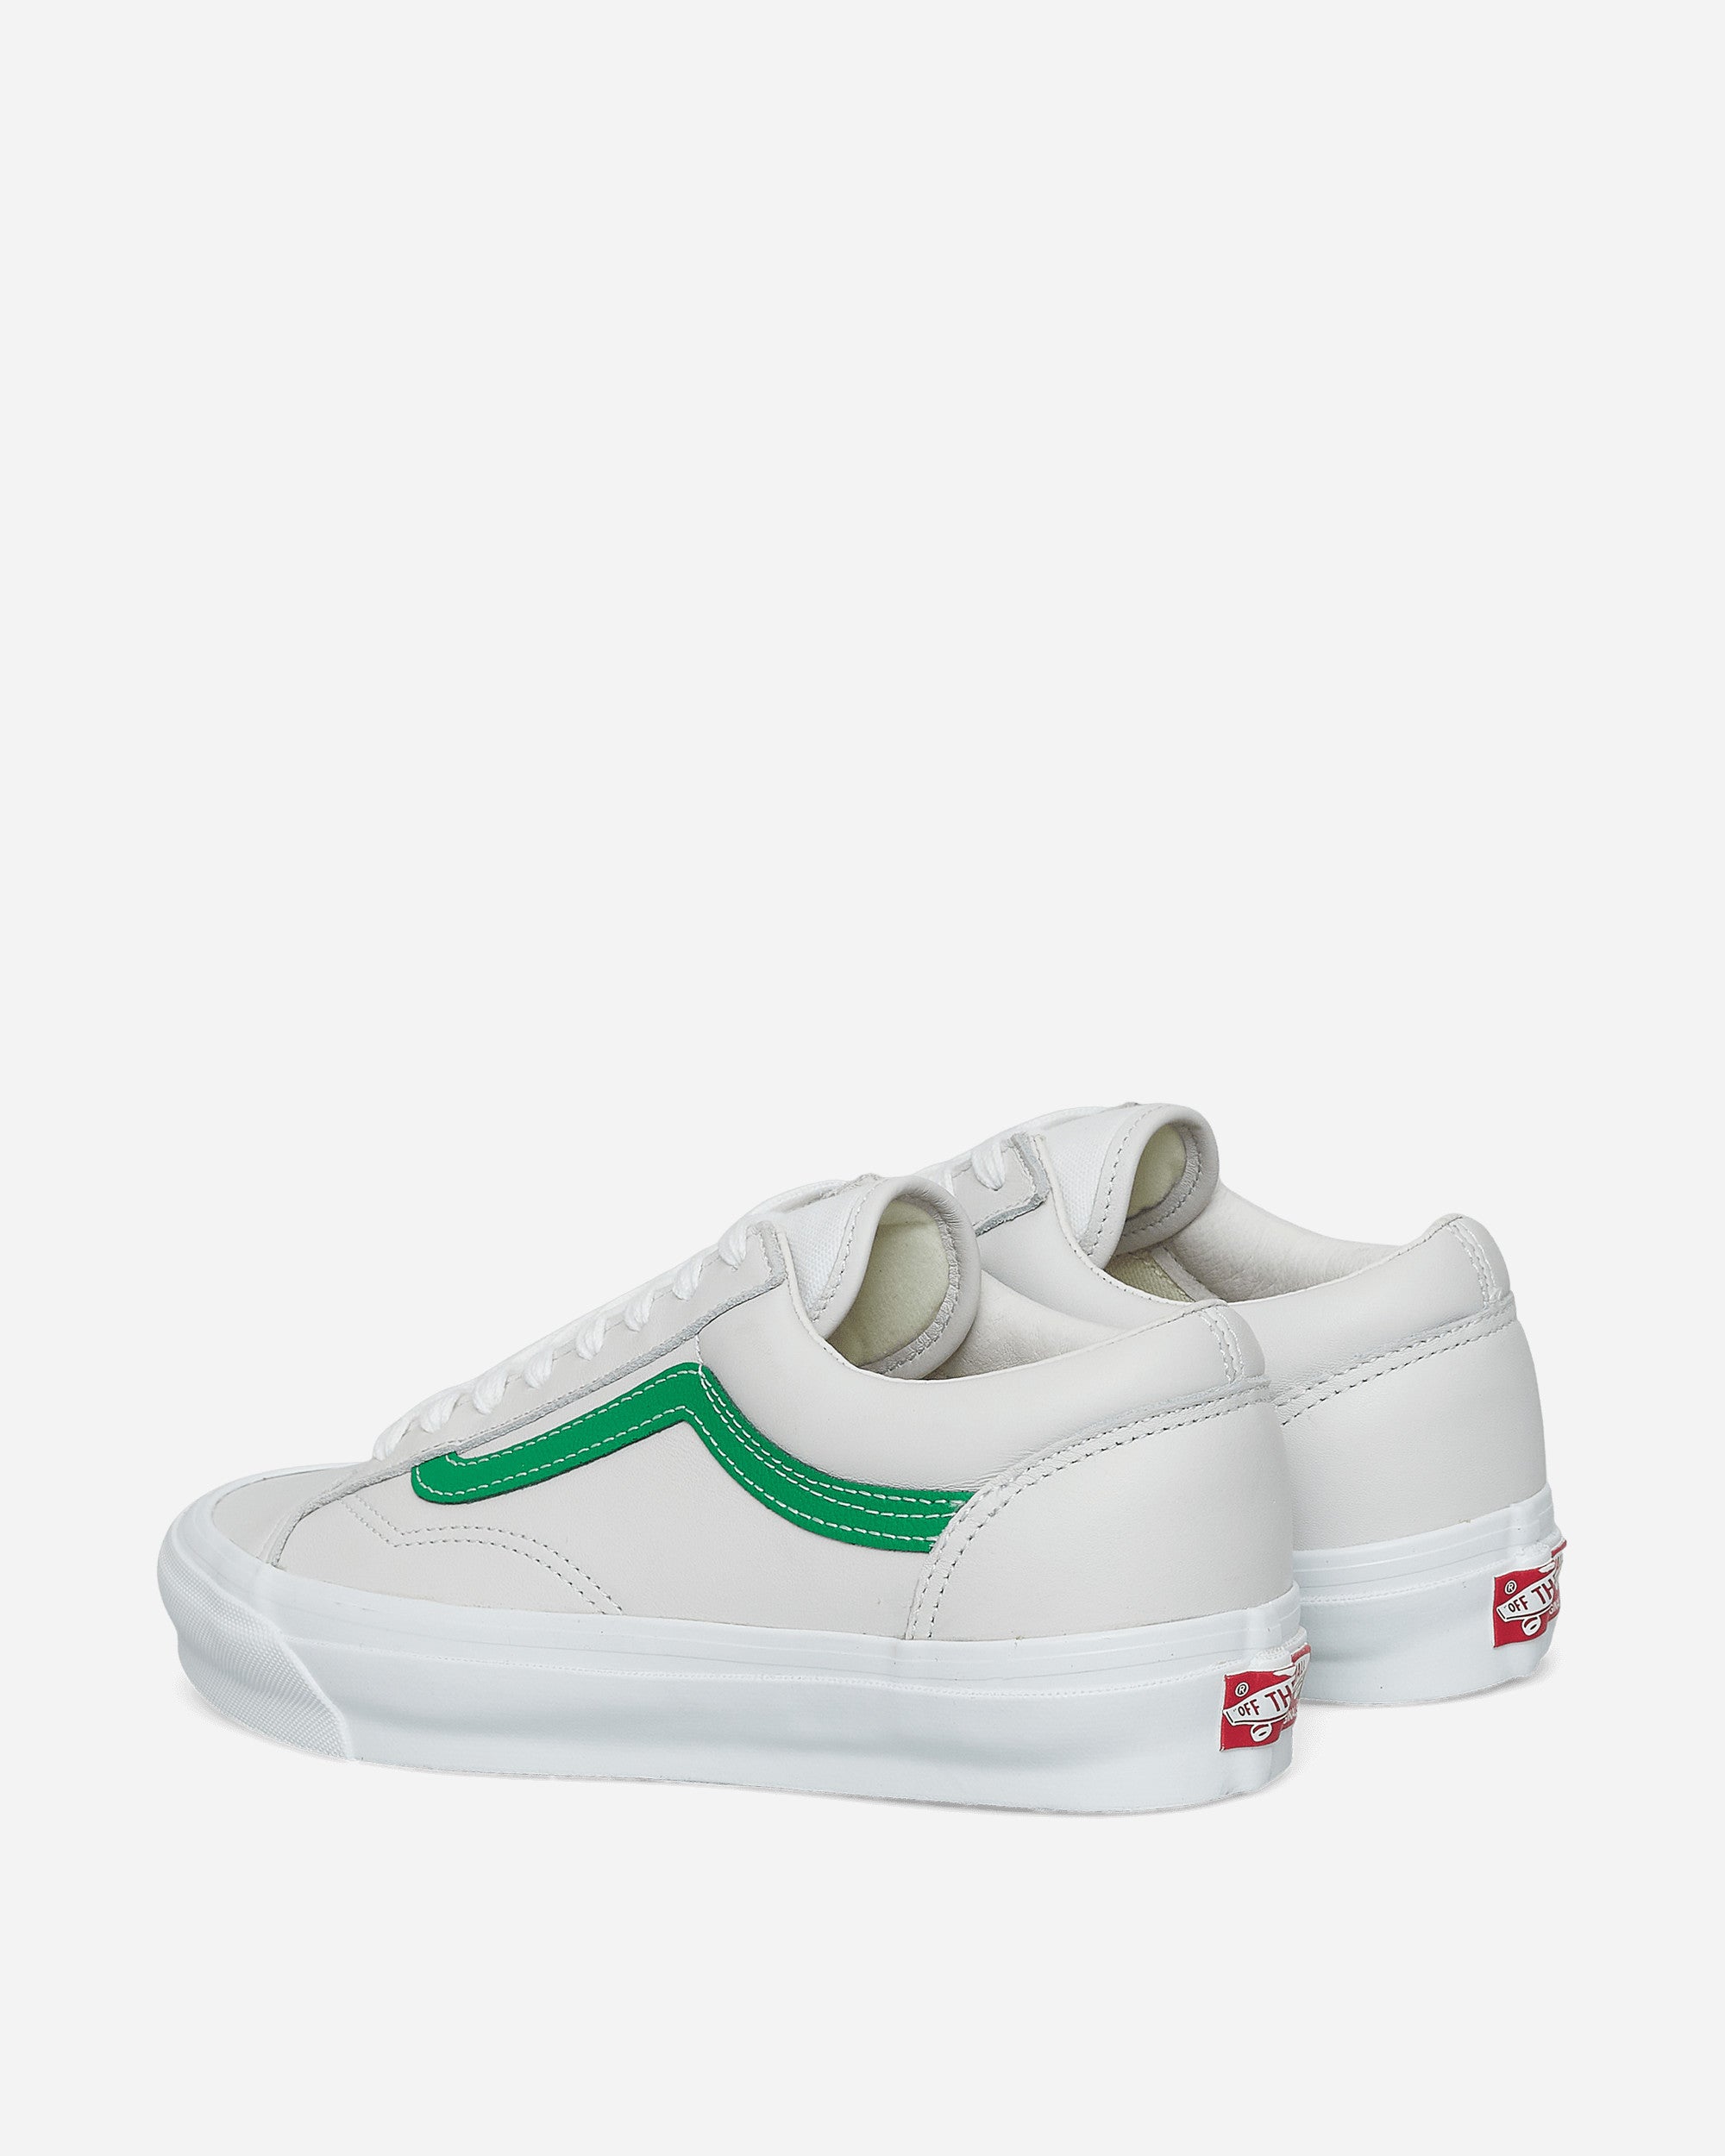 Vans Og Style 36 Lx Deep/True White Sneakers Low VN0A4BVE21C1